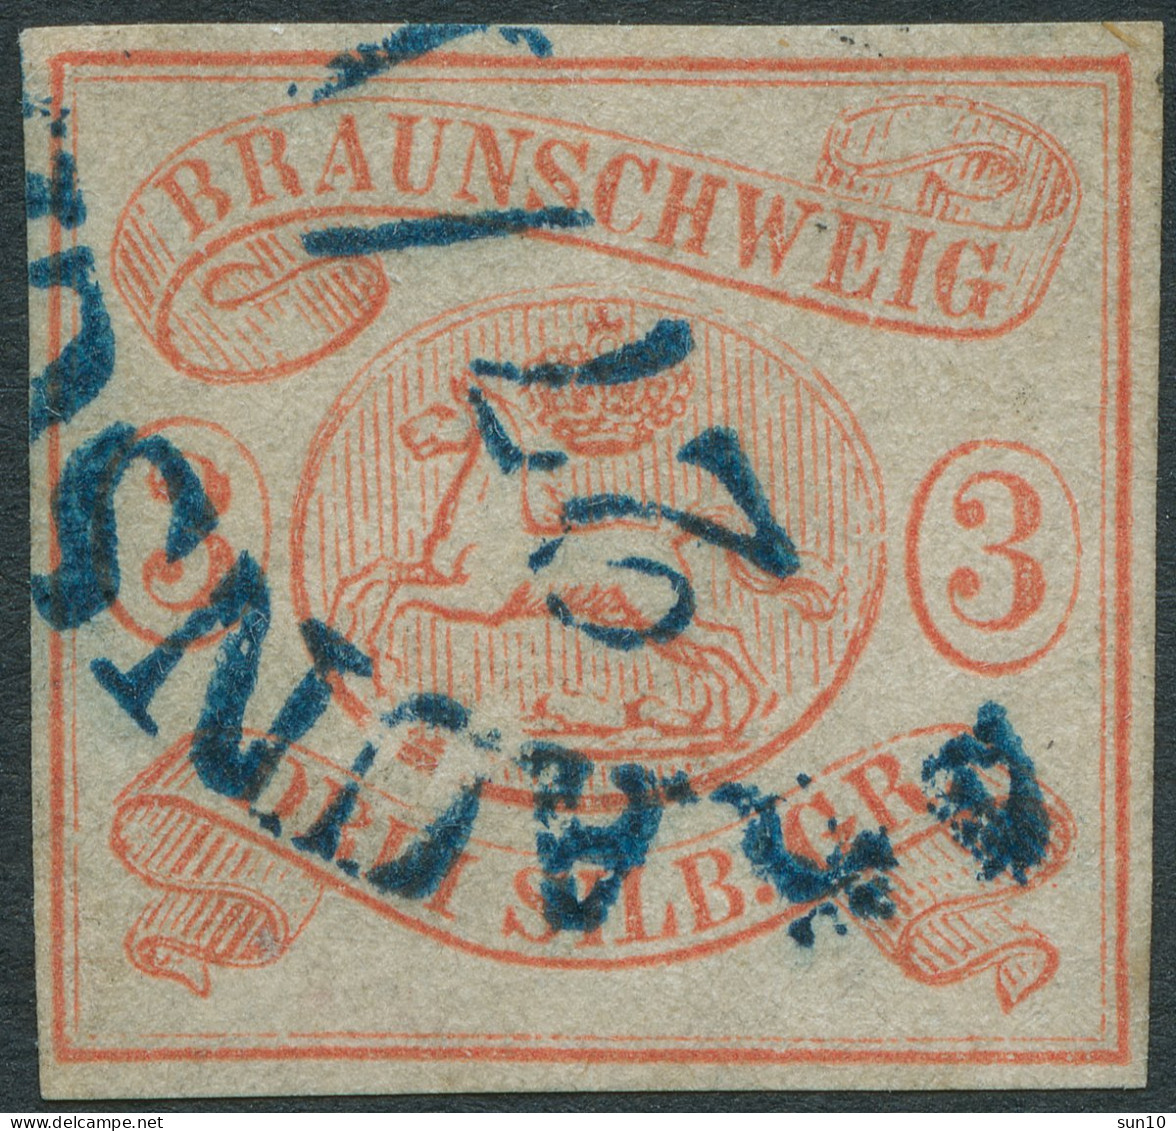 BRAUNSCHWEIG Um 1852, Nr. 3, 6 Sgr. GESTEMPELT BRAUNSCHWEIG, SIGN. Mi. 350,- - Braunschweig